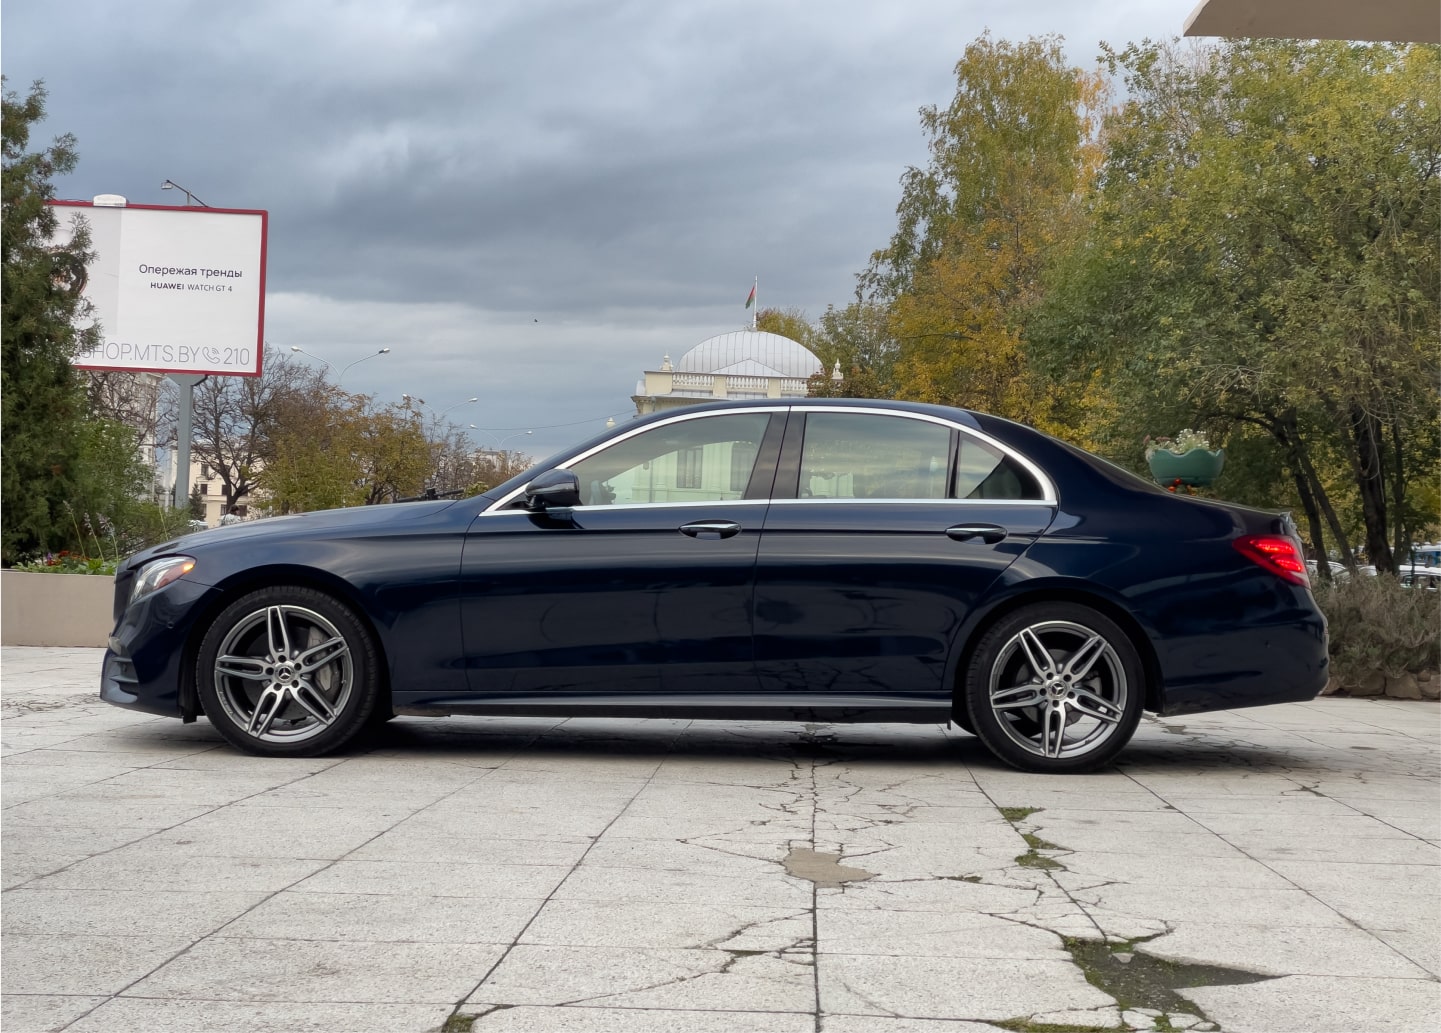 Аренда  Mercedes Benz E-Сlass 4Matic W213 E350 AMG Exclusive  3 класса 2020 года в городе Минск от 90 $/сутки,  двигатель: Бензин , объем 2.0 литров, КАСКО (Мультидрайв), без водителя, вид 7 - West Group